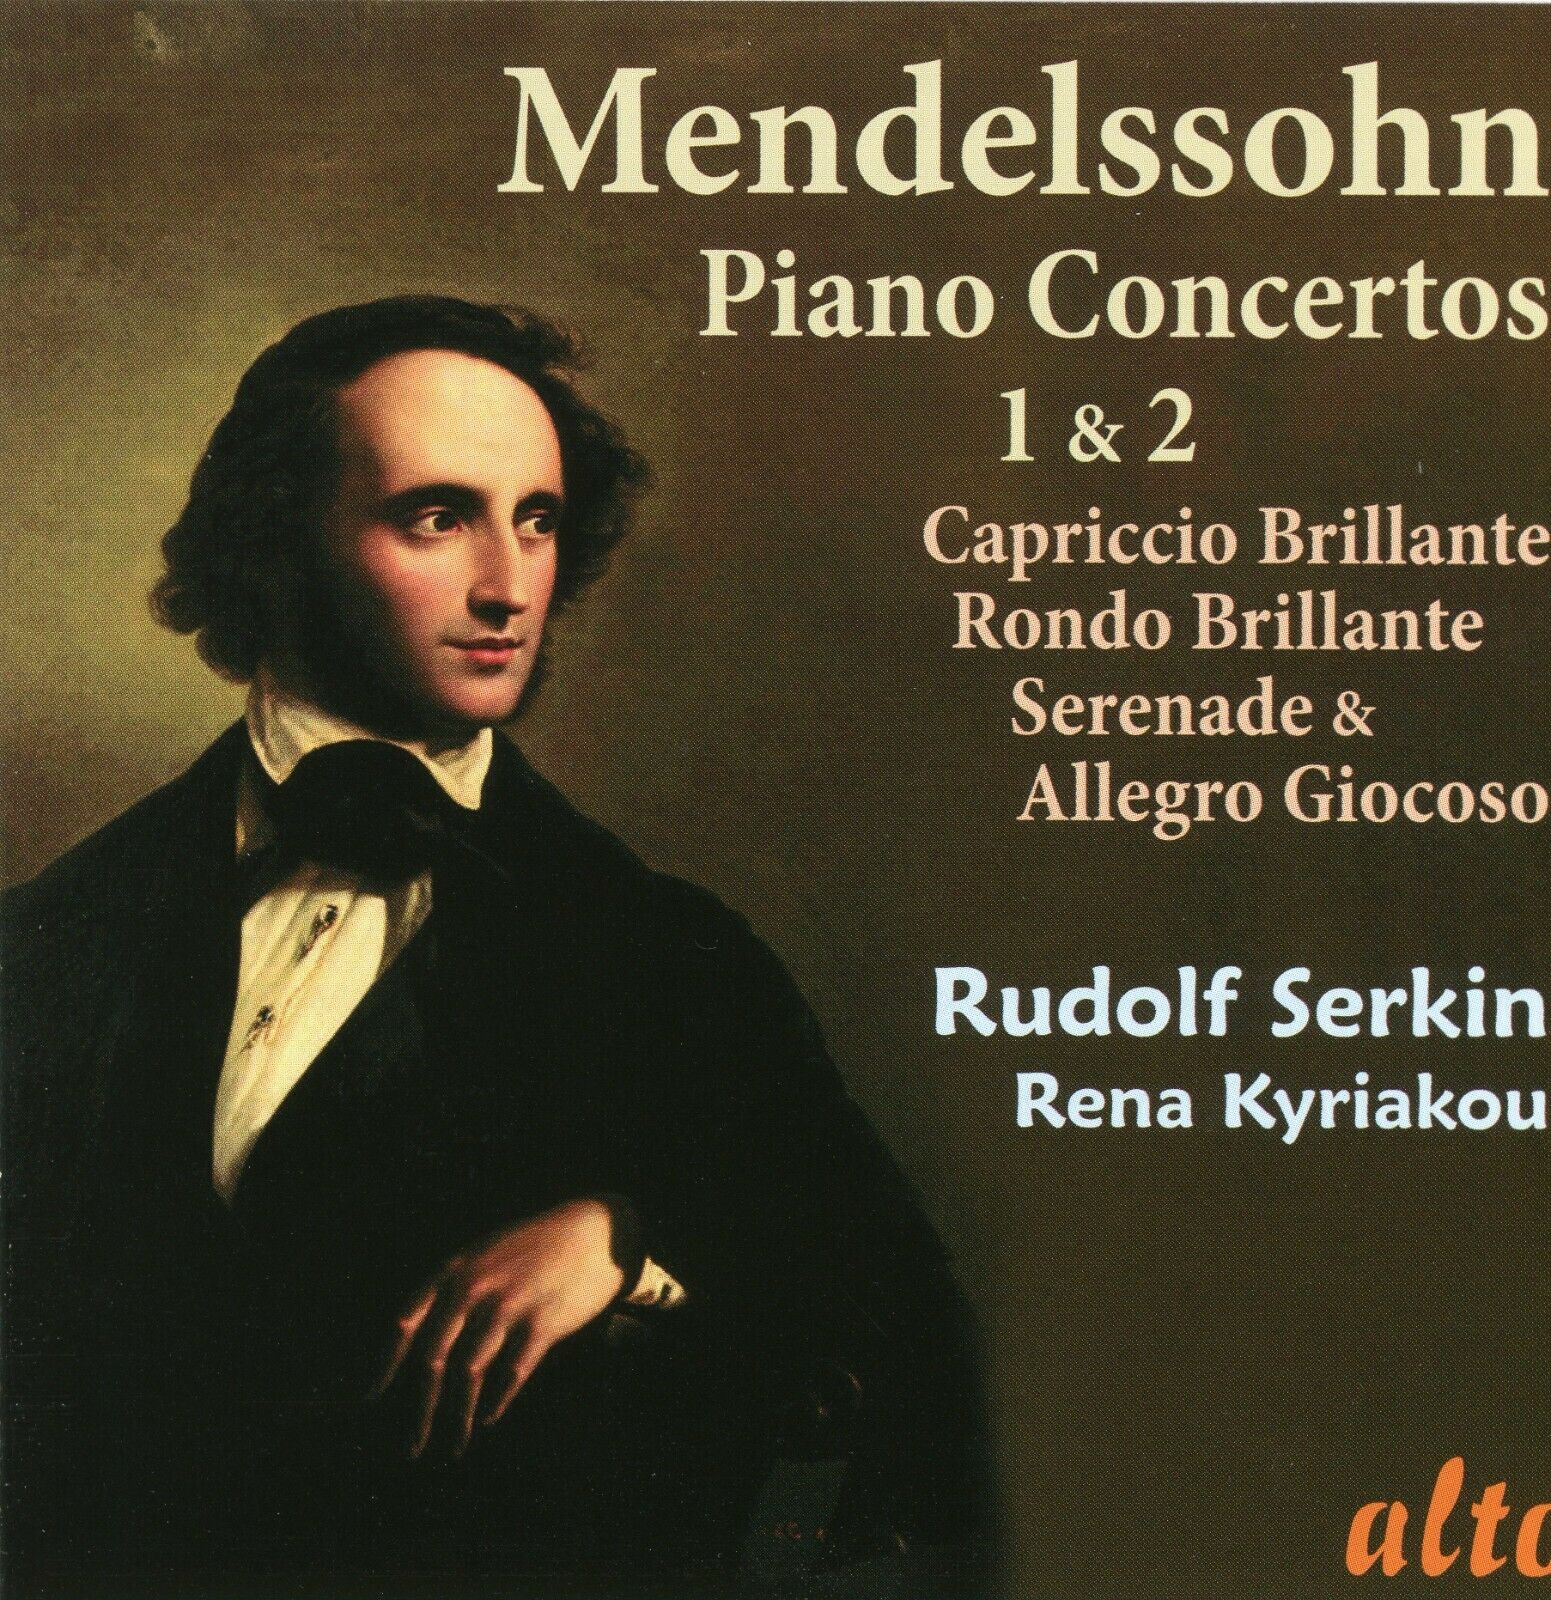 MENDELSSOHN - PIANO CONCERTOS 1 & 2 - CAPRICCIO BRILLIANTE CD RUDOLF SERKIN